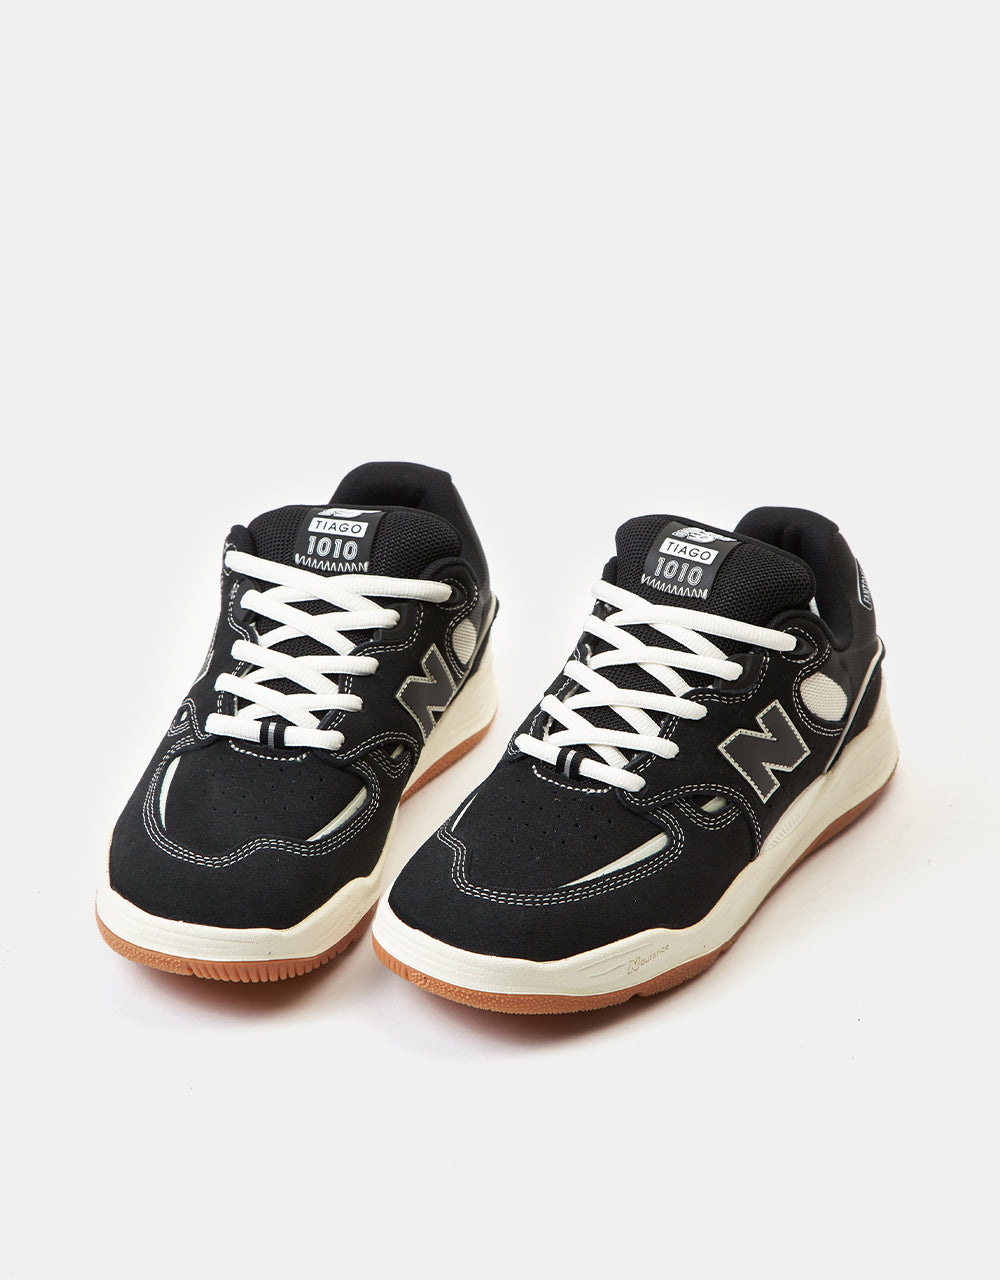 New Balance Numeric Tiago Lemos 1010 Skate Shoes - Black/Sea Salt